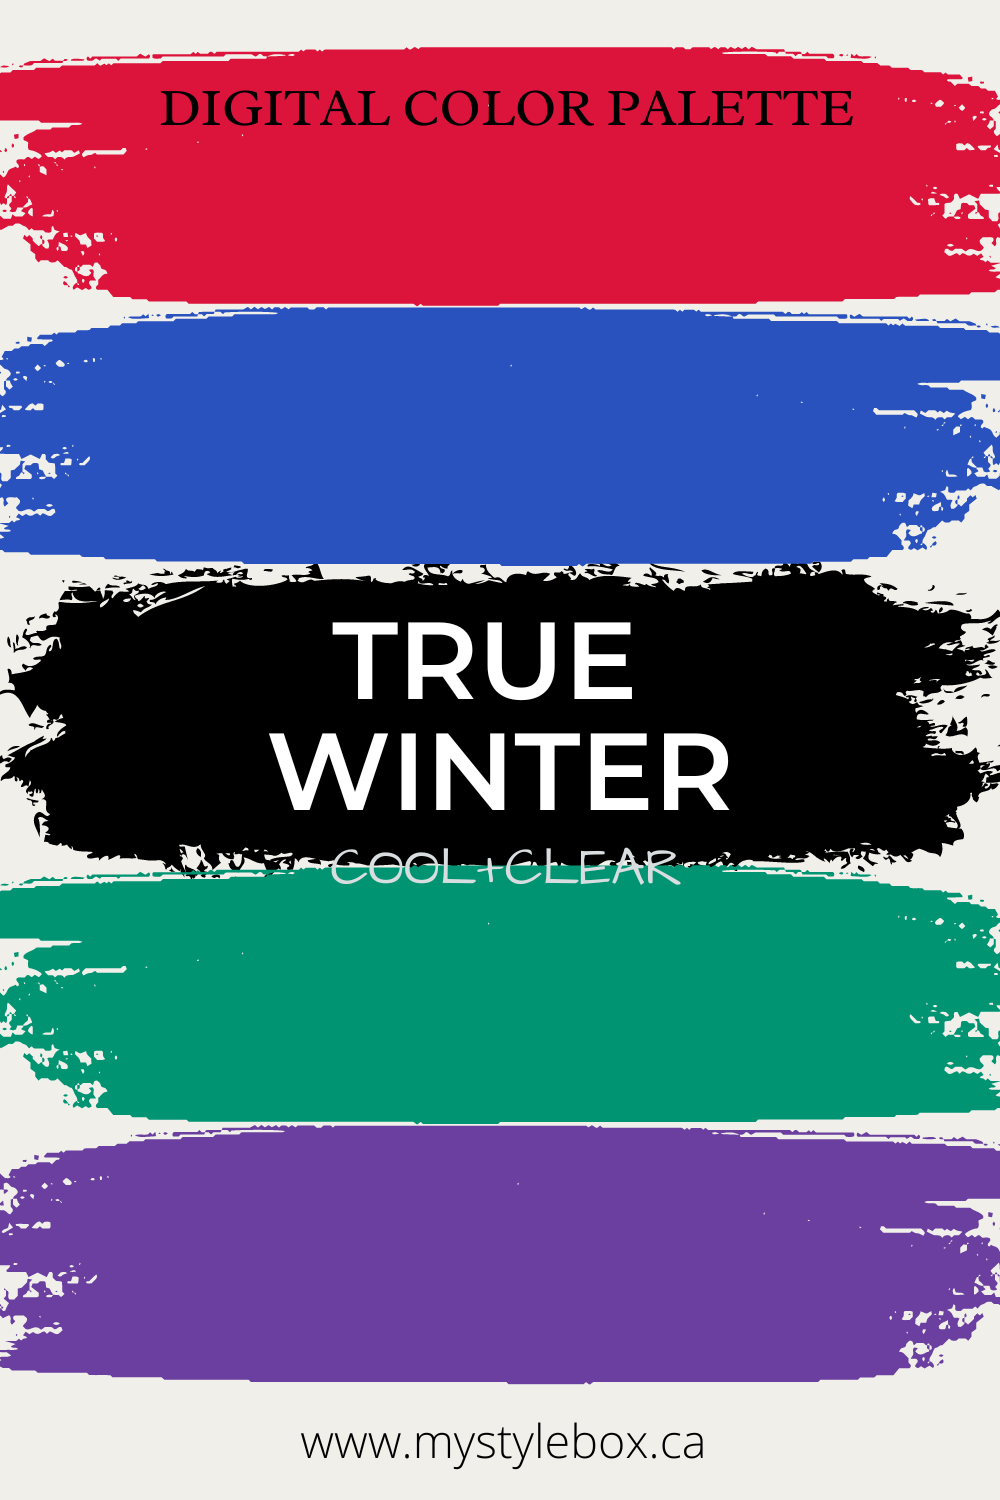 True (Cool) Winter Season Color Palette